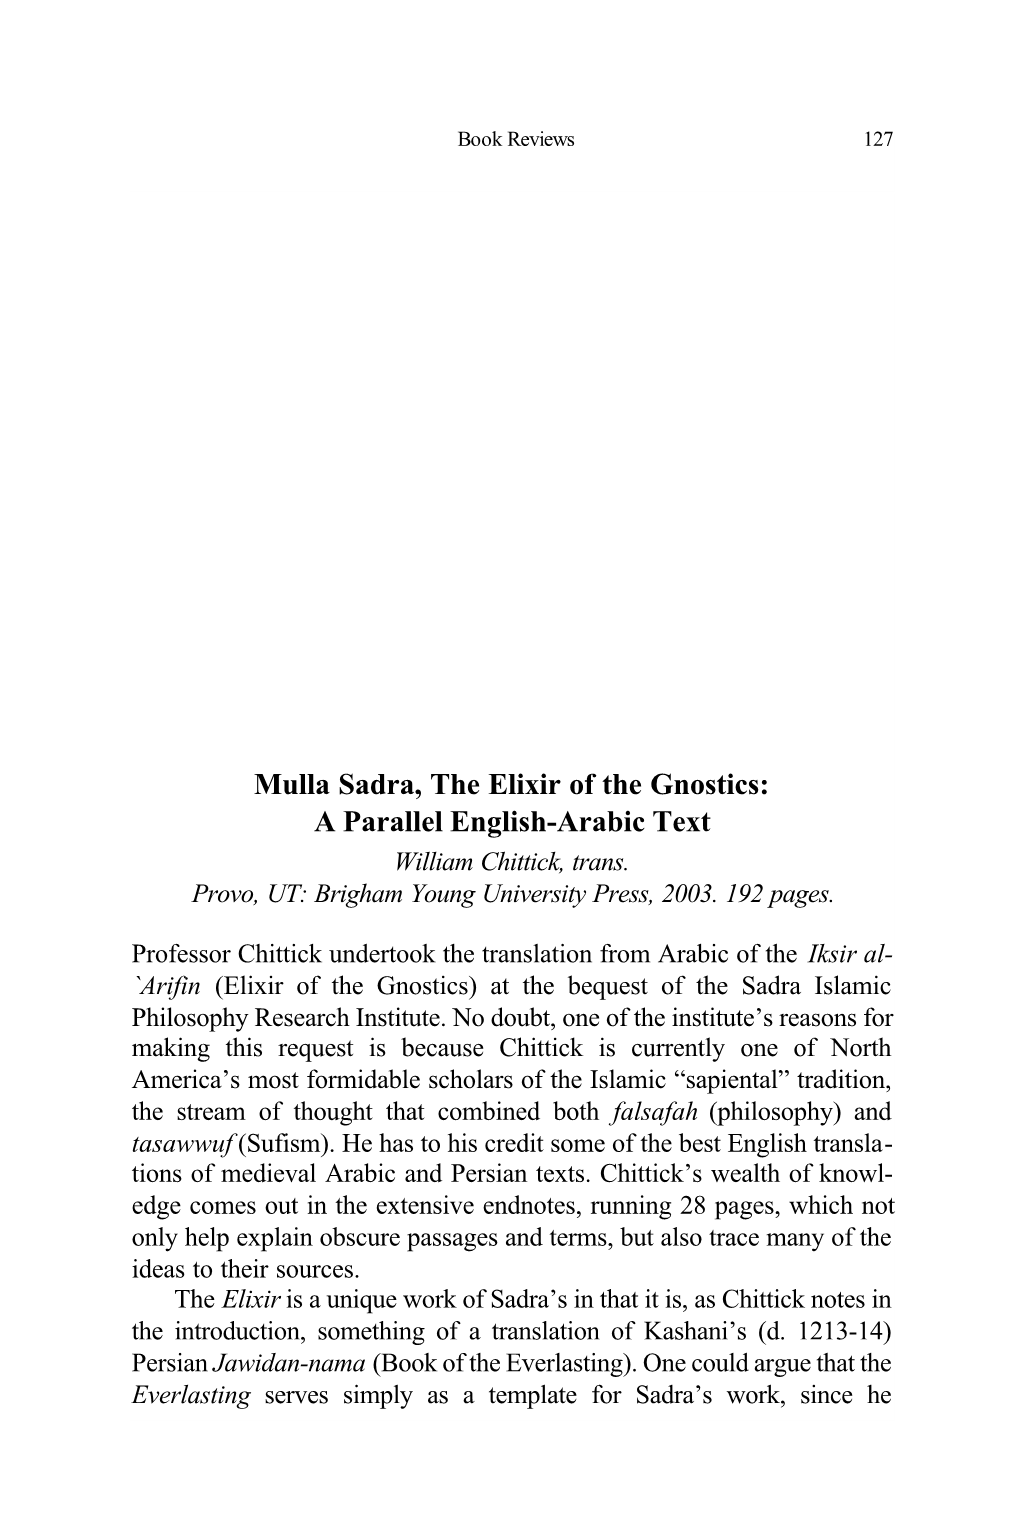 Mulla Sadra, the Elixir of the Gnostics: a Parallel English-Arabic Text William Chittick, Trans